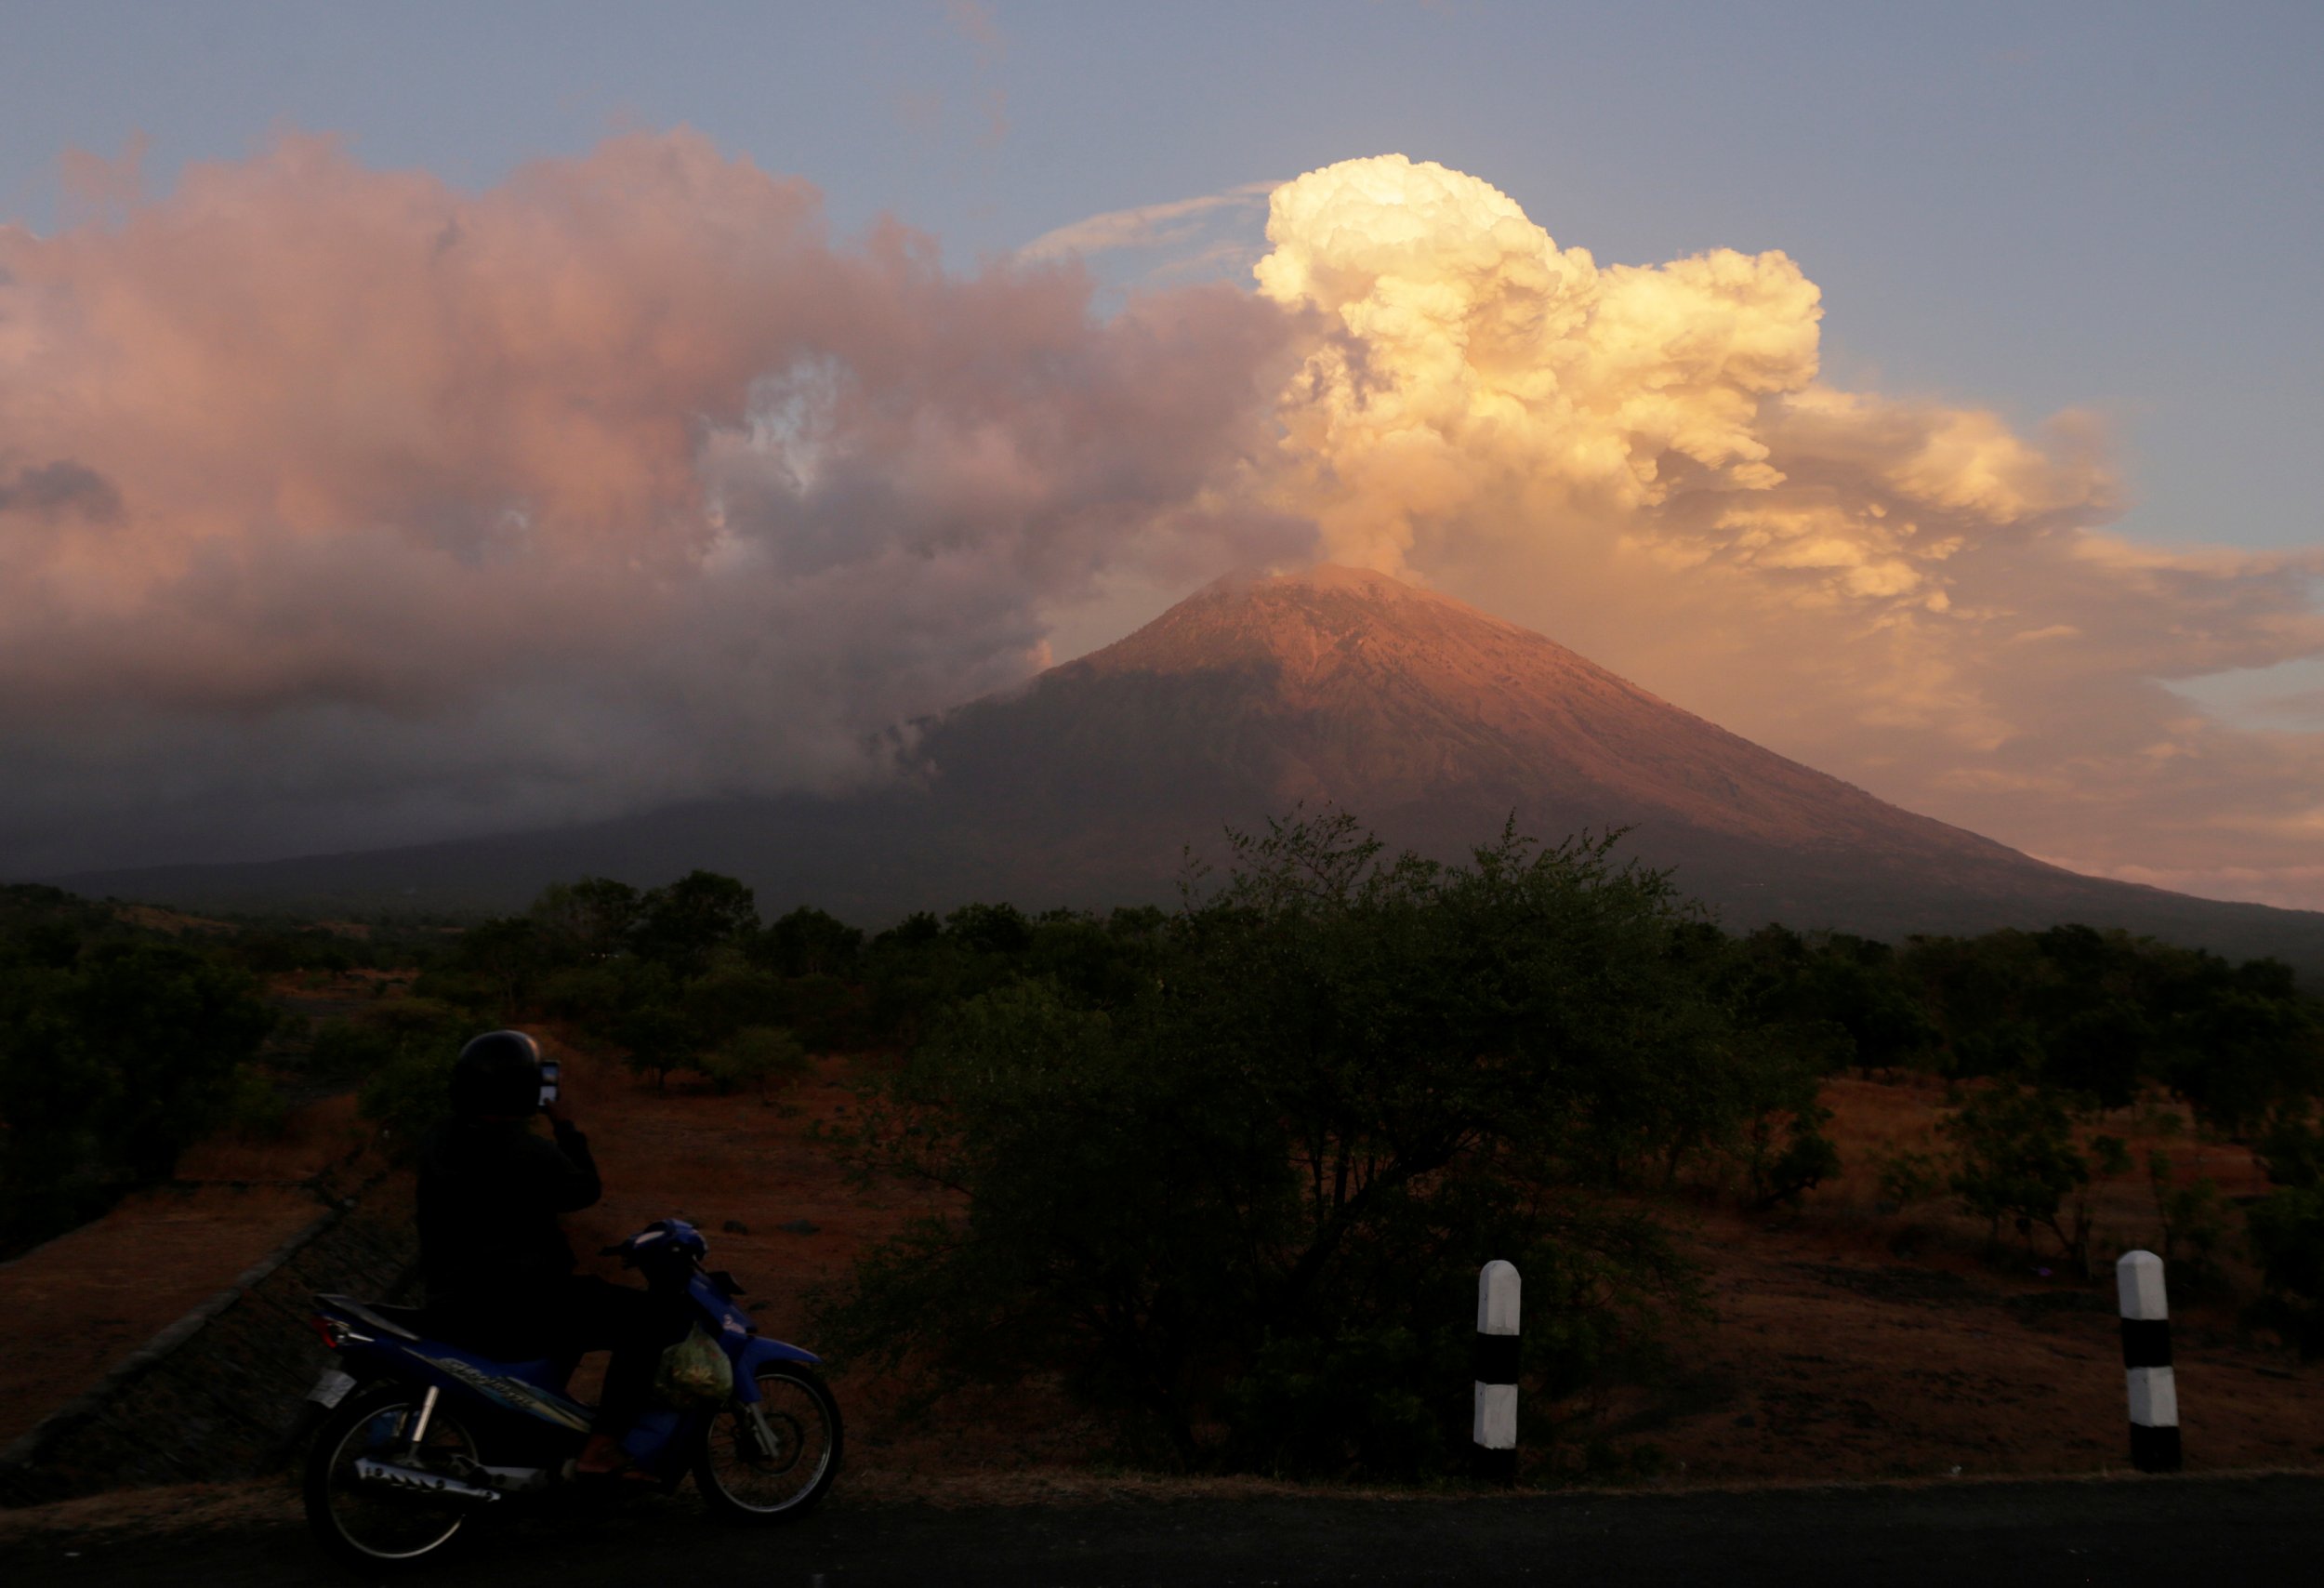  Bali  Volcano  Eruption Disrupts Travel  as Mount Agung Emits 